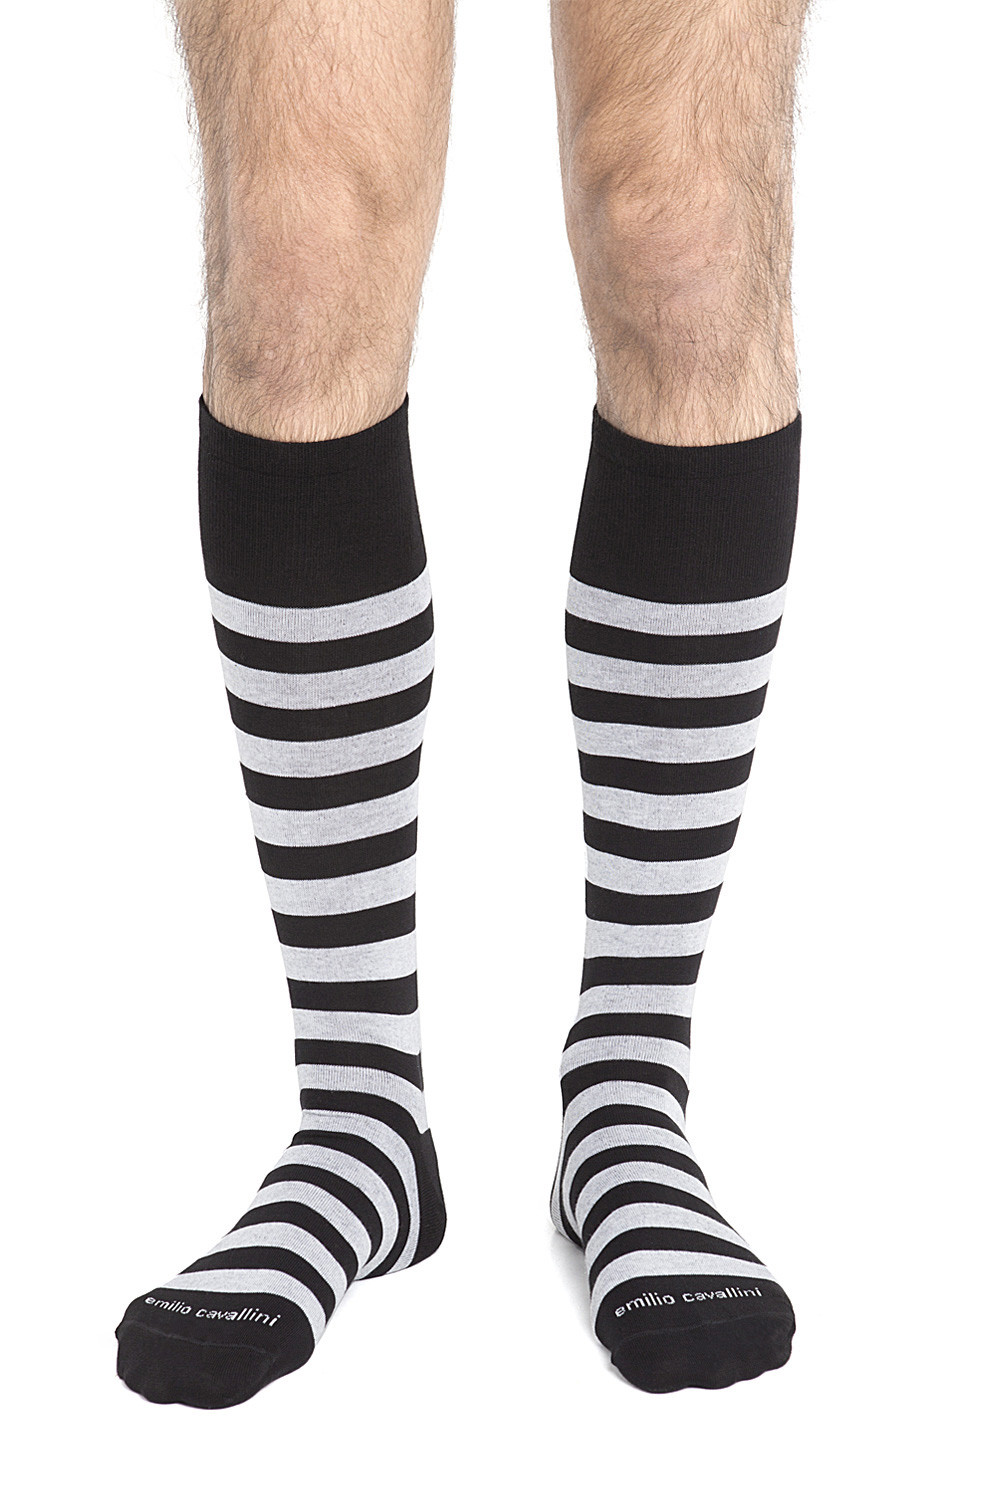 Horizontal Stripes Socks, Socks, Men